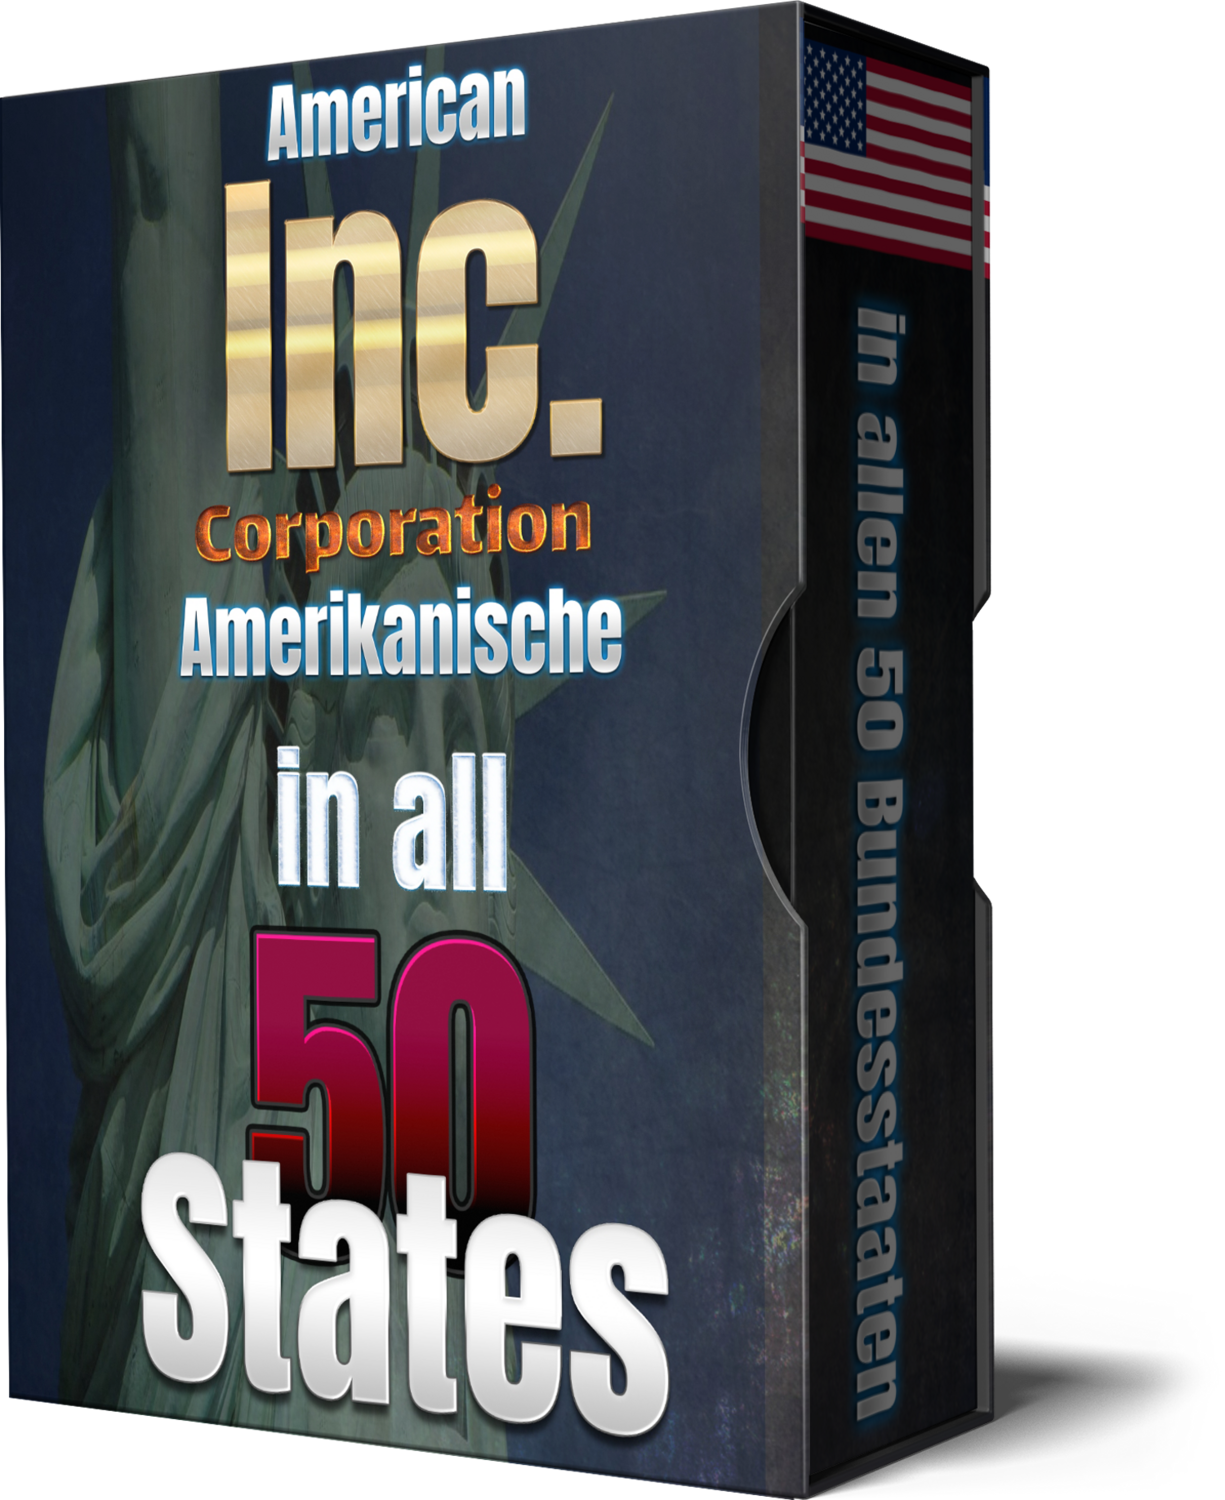 Amerikanische Inc. (Corporation) (verfügbar in allen 50 Bundesstaaten)